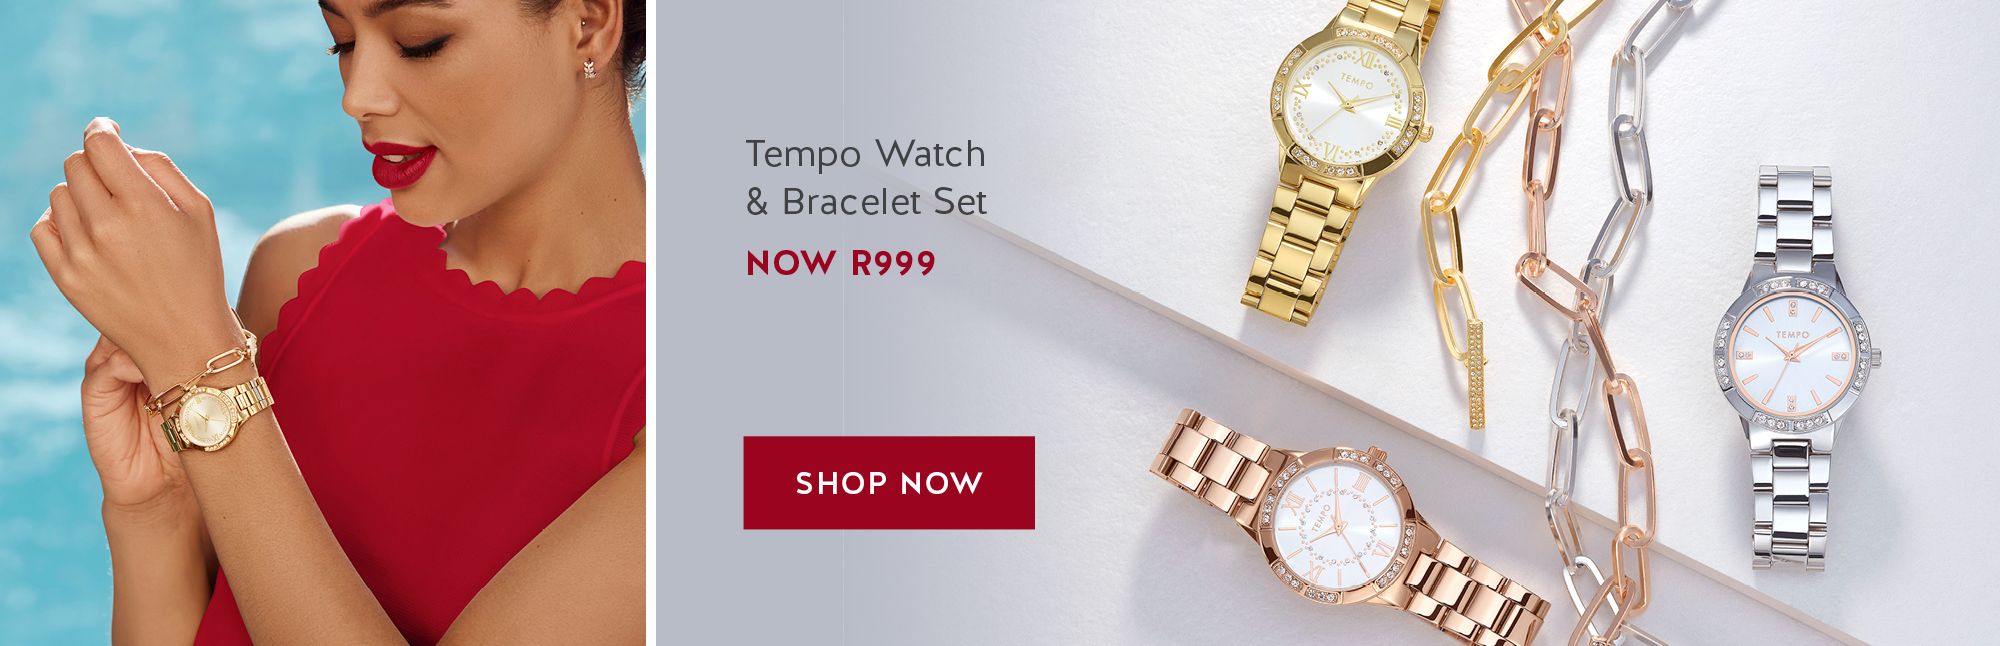 Tempo Watch & Bracelet Set, NOW R999